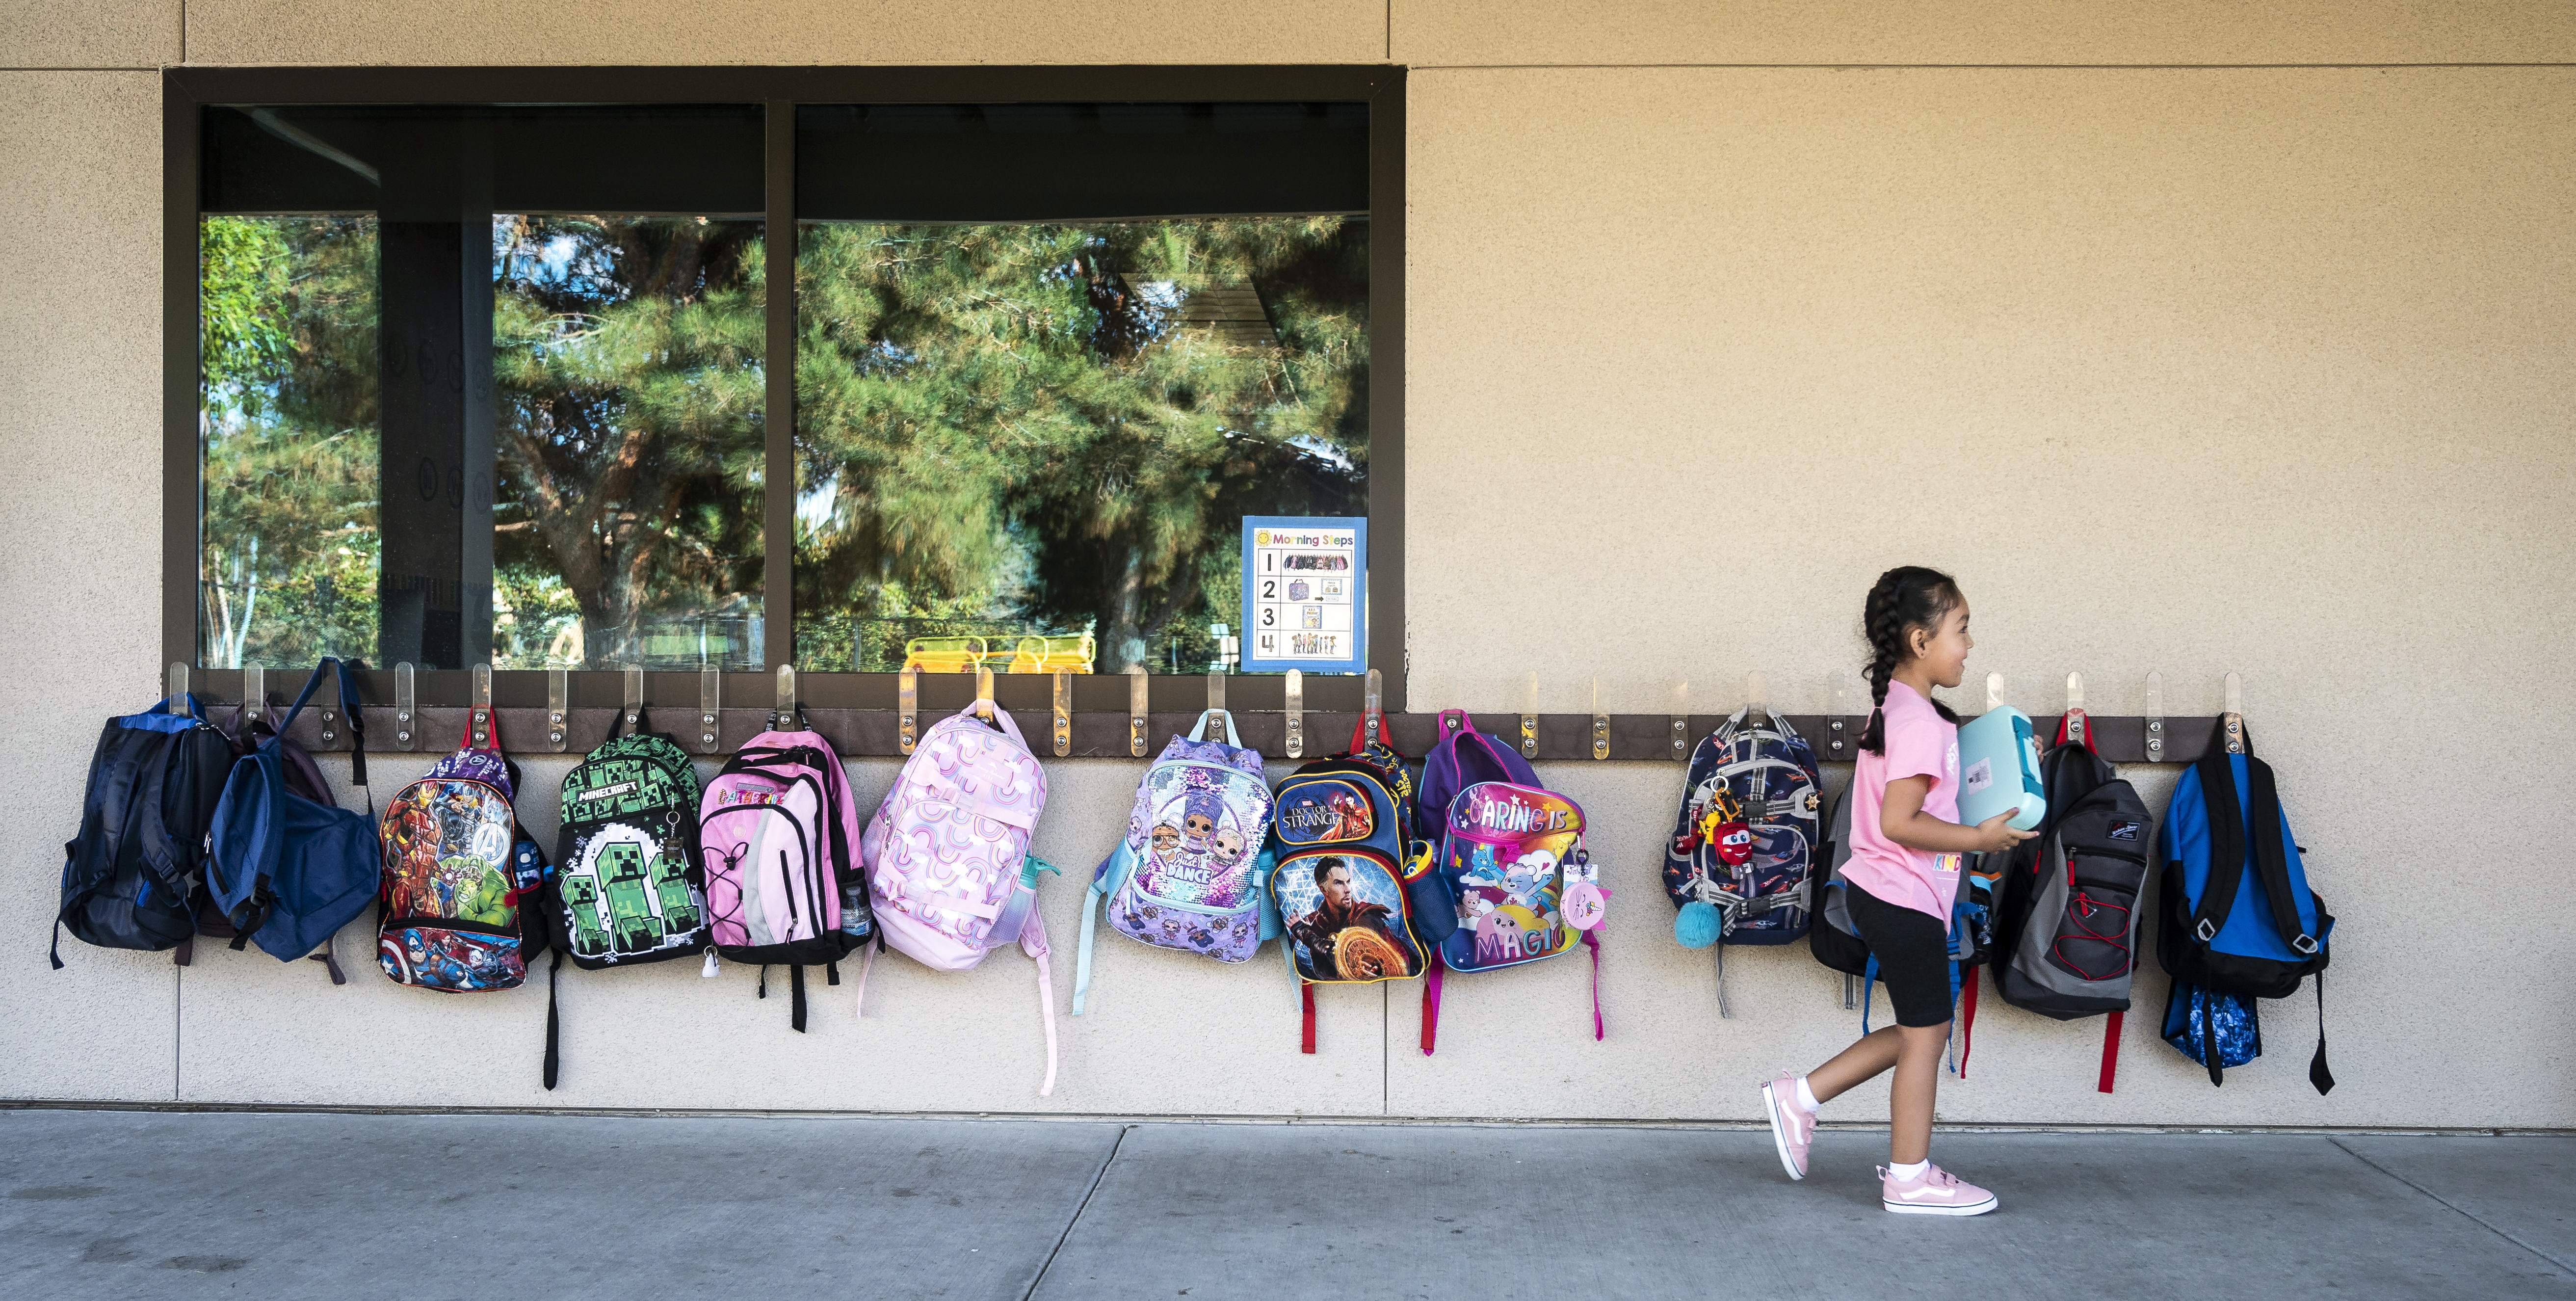 Hansen Elementary School in Anaheim, CA began classes on Tuesday, August 9, 2022. (Photo by Paul Bersebach/MediaNews Group/Orange County Register via Getty Images)